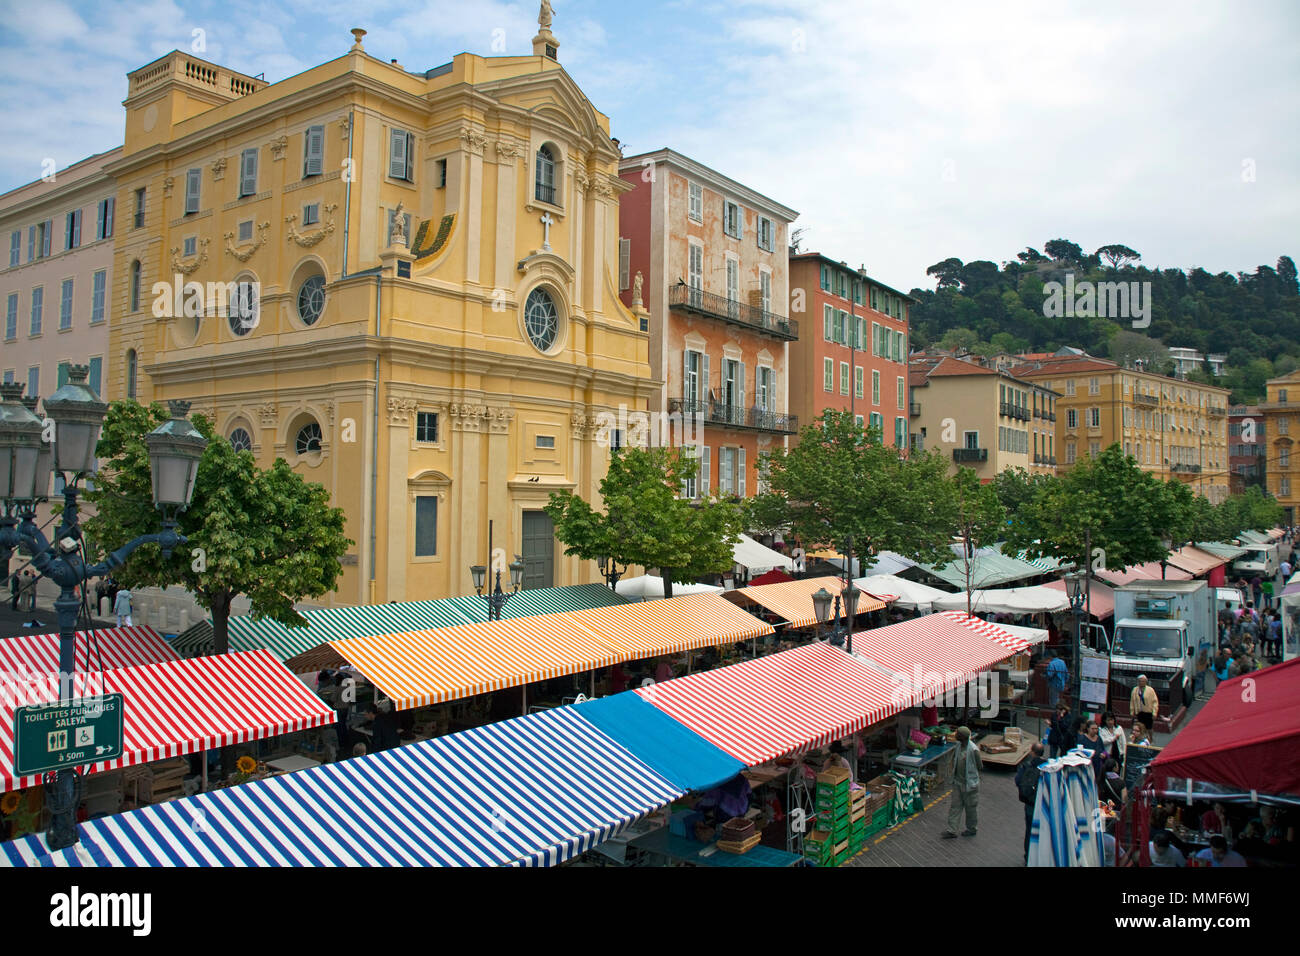 Markt am Cours Saleya, Nizza, Côte d'Azur, Alpes Maritimes, Südfrankreich, Frankreich, Europa Stockfoto